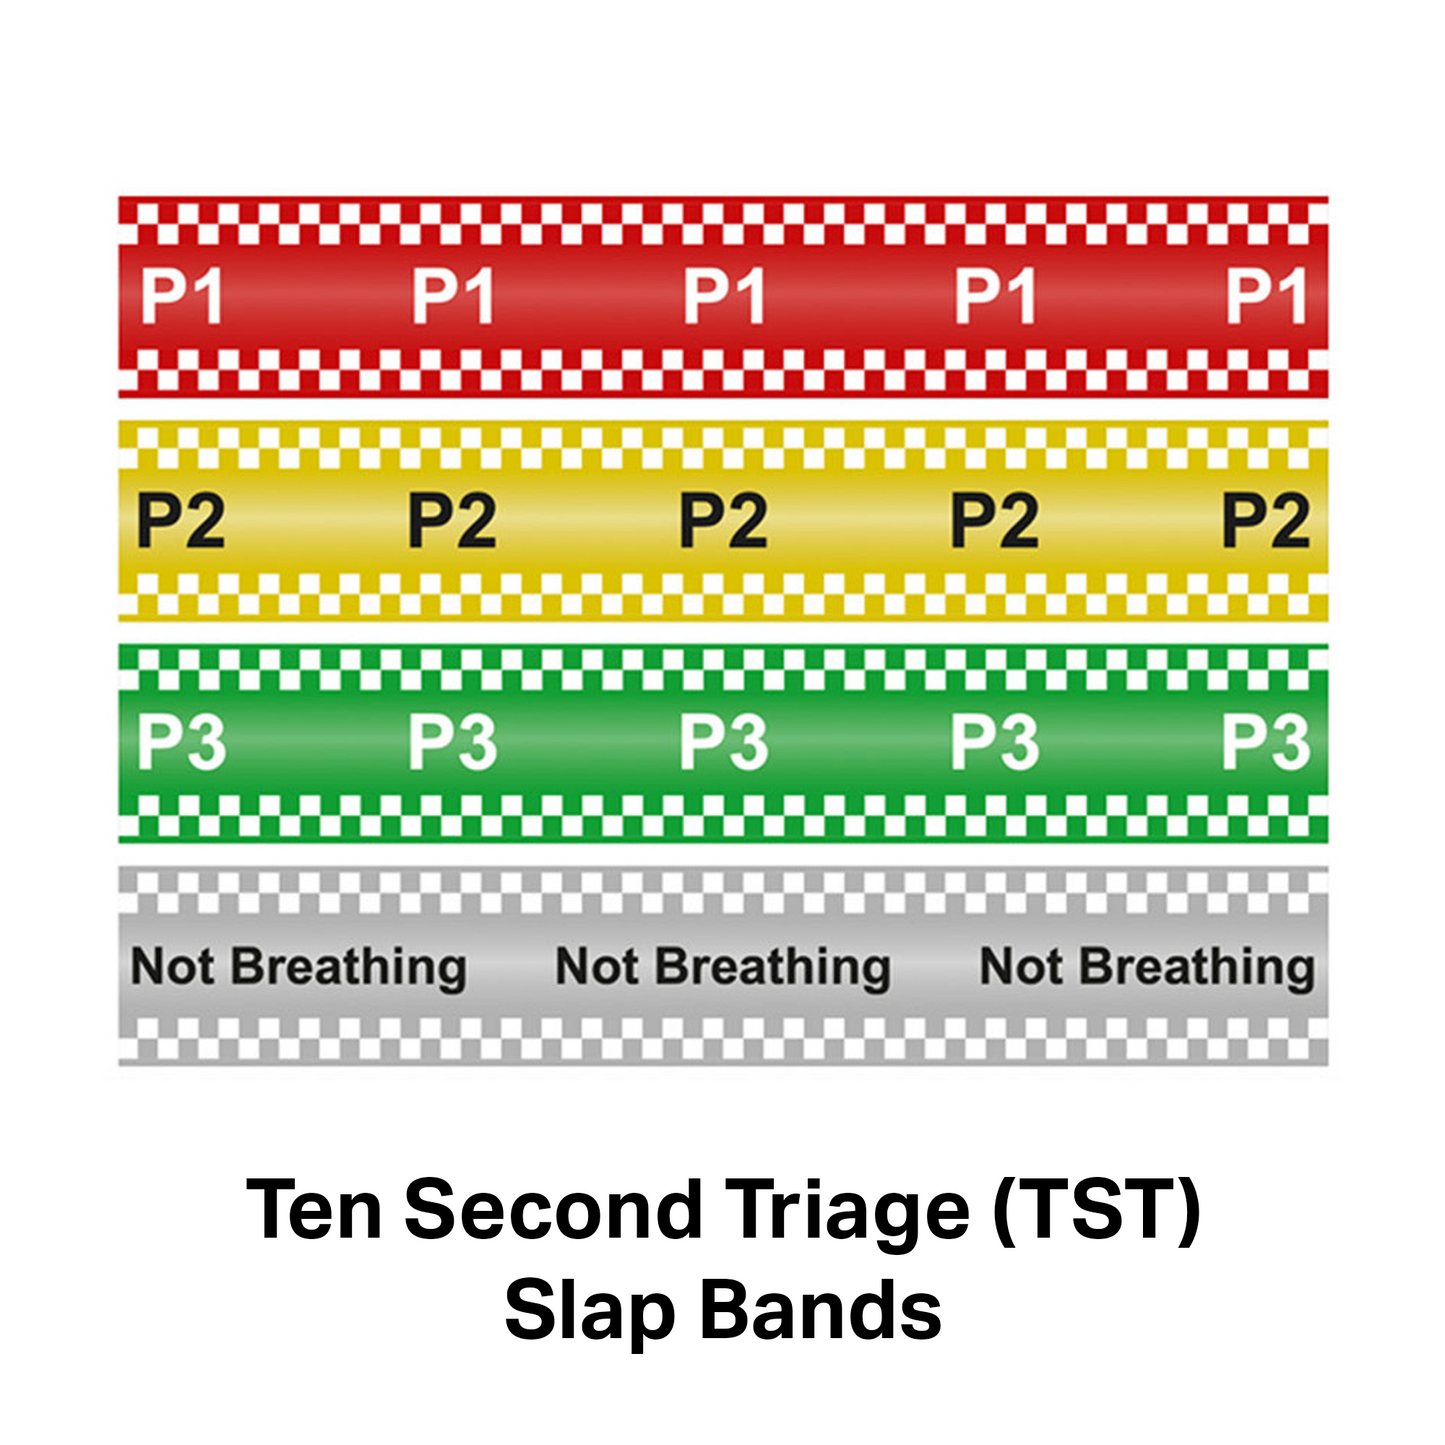 NHS Ten Second Triage (TST) Slap Band Pack of 20 - Black Case